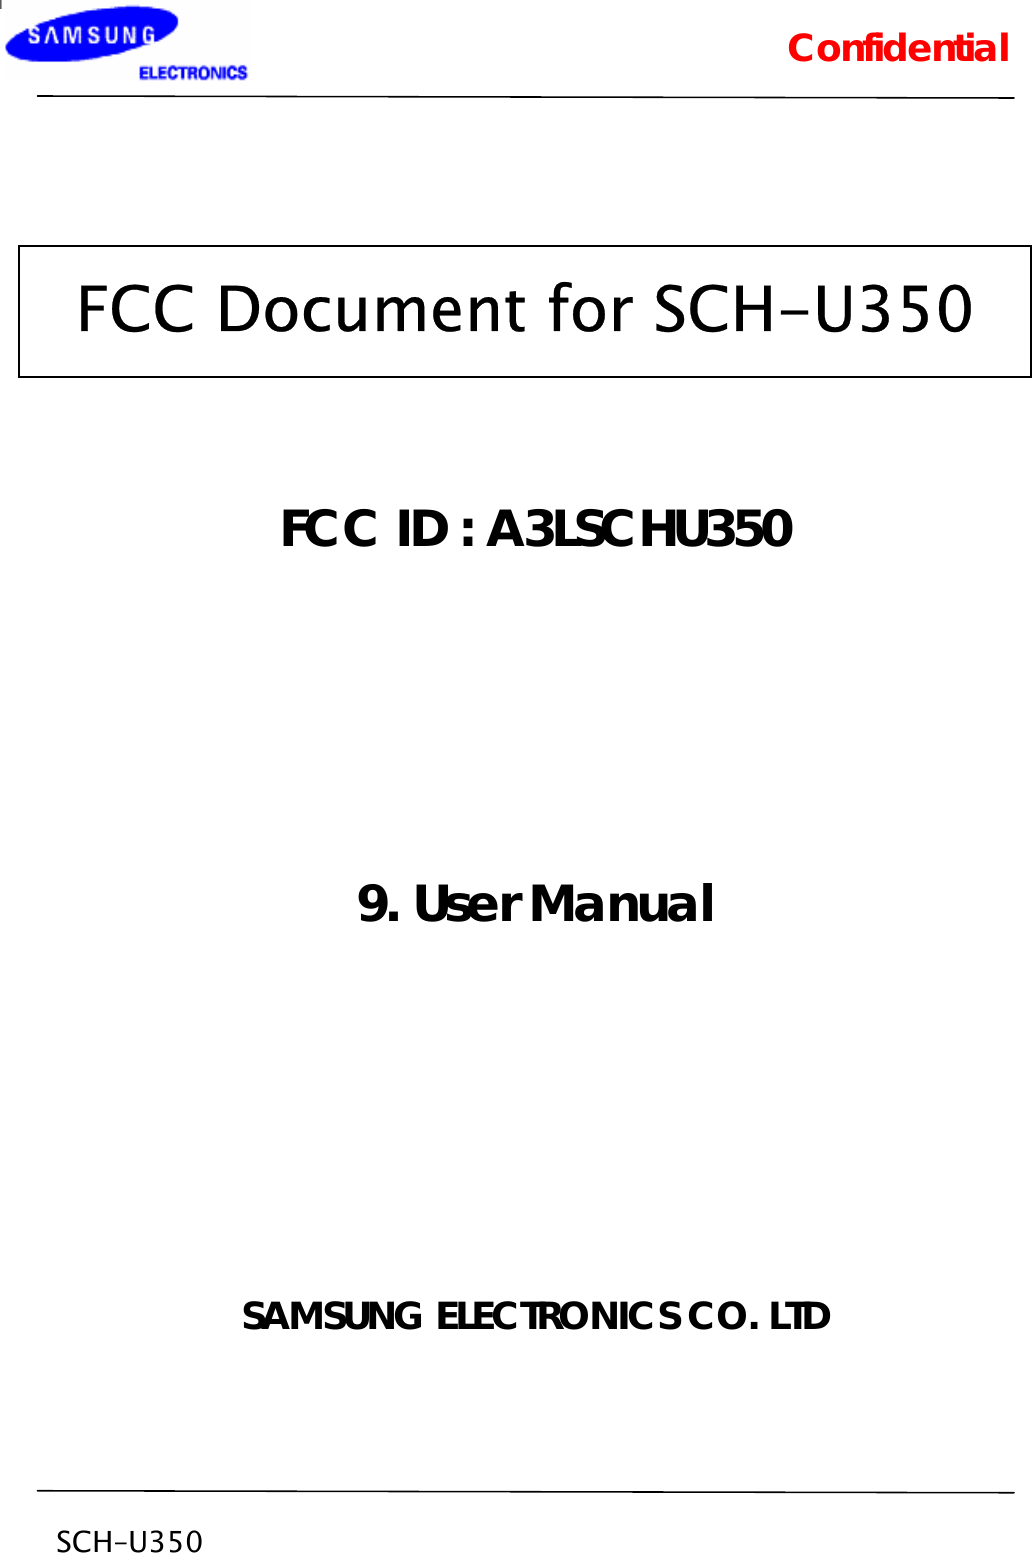               Confidential SCH–U350           FCC ID : A3LSCHU350         9. User Manual          SAMSUNG ELECTRONICS CO. LTD    FCC Document for SCH-U350 